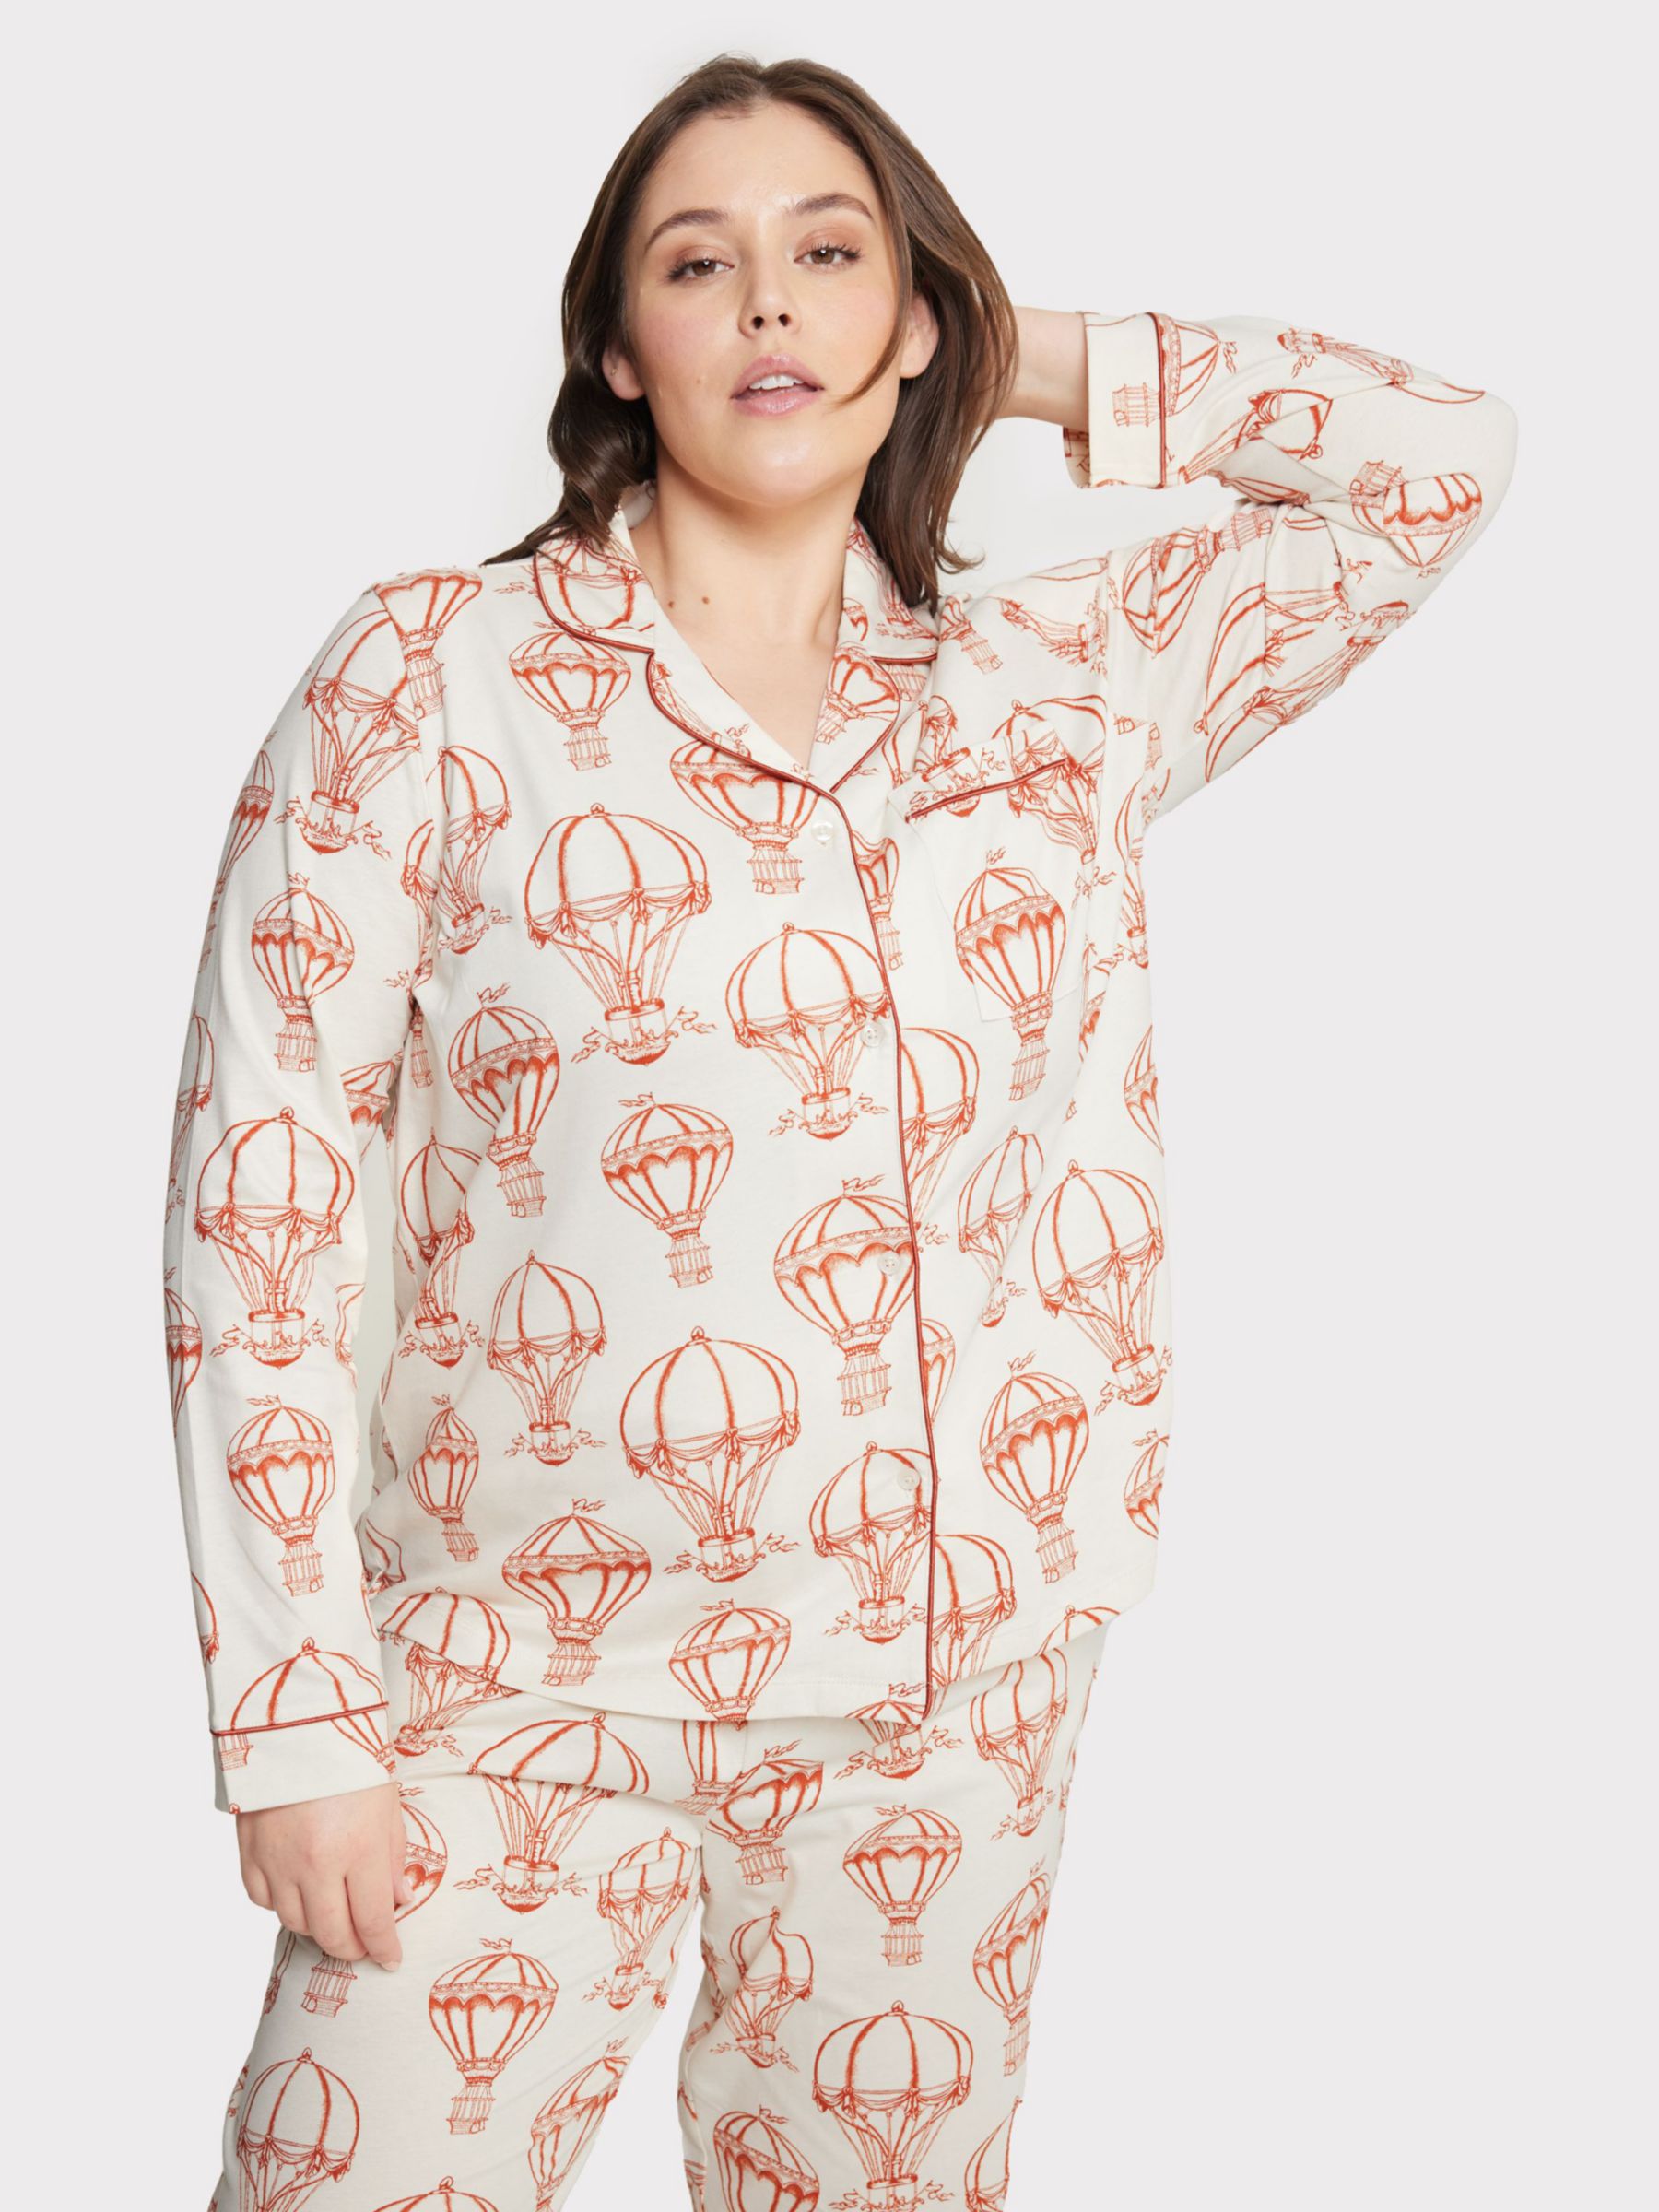 Buy Chelsea Peers Curve Air Balloon Print Organic Cotton Pyjama Set, Off White/Orange Online at johnlewis.com